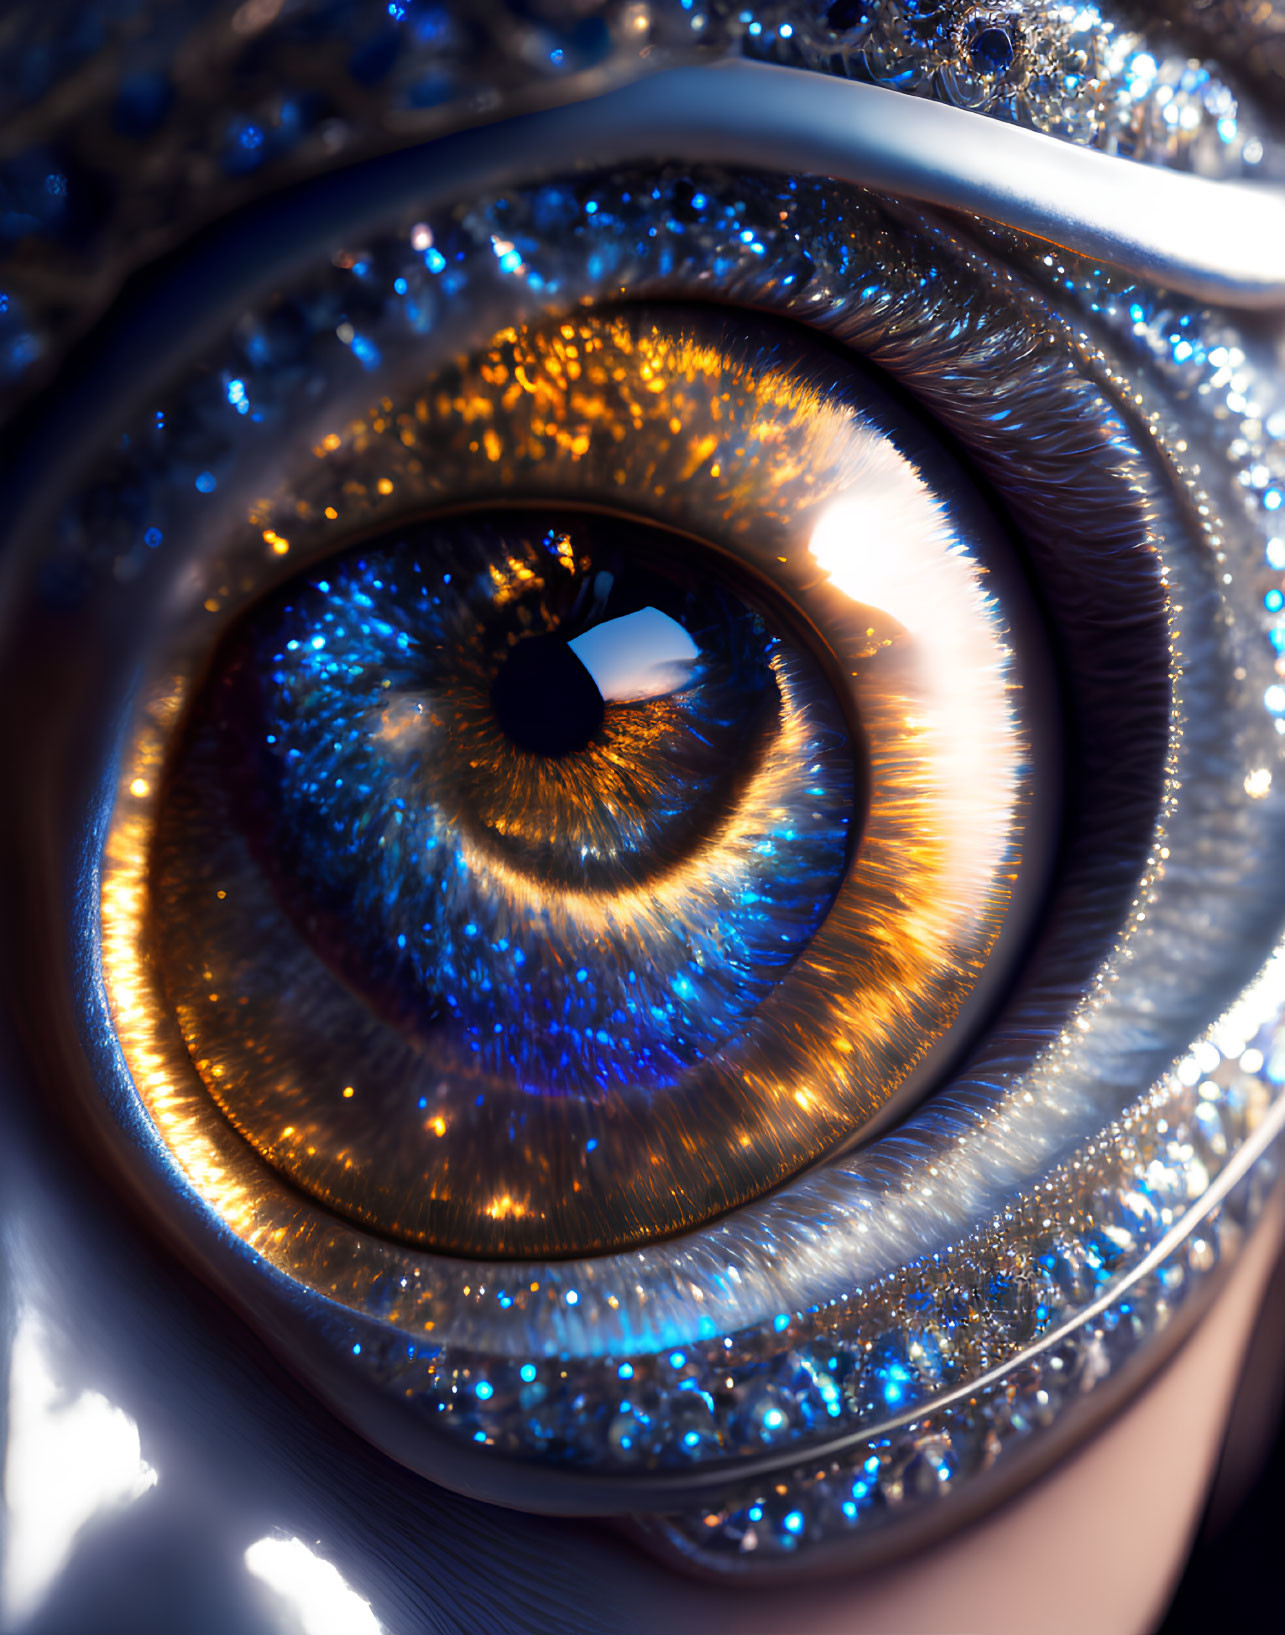 Detailed Sparkling Golden-Brown Eye Close-Up